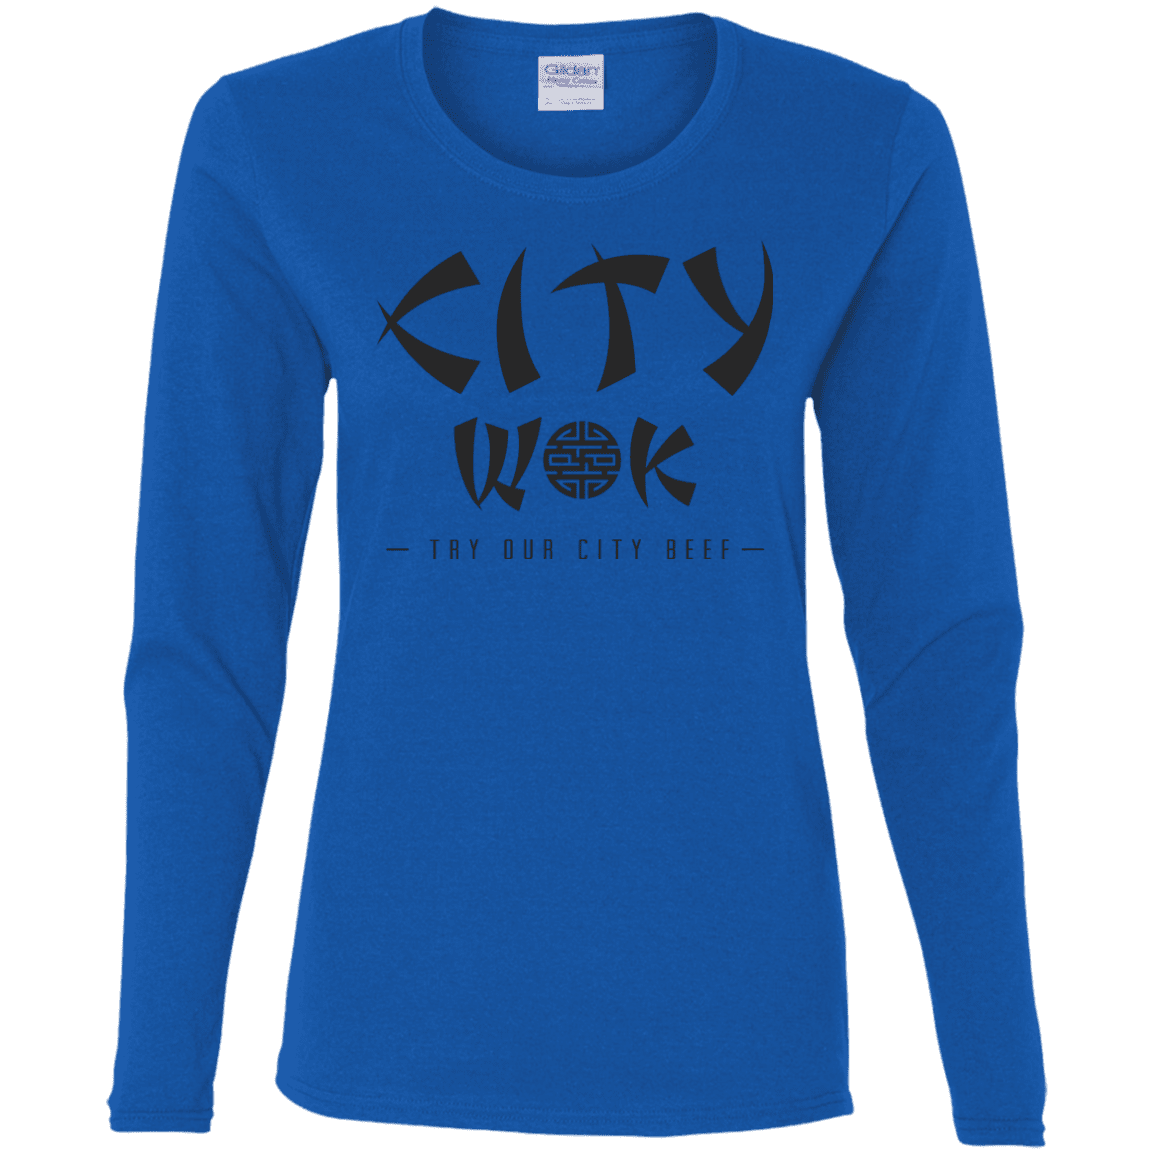 T-Shirts Royal / S City Wok Women's Long Sleeve T-Shirt